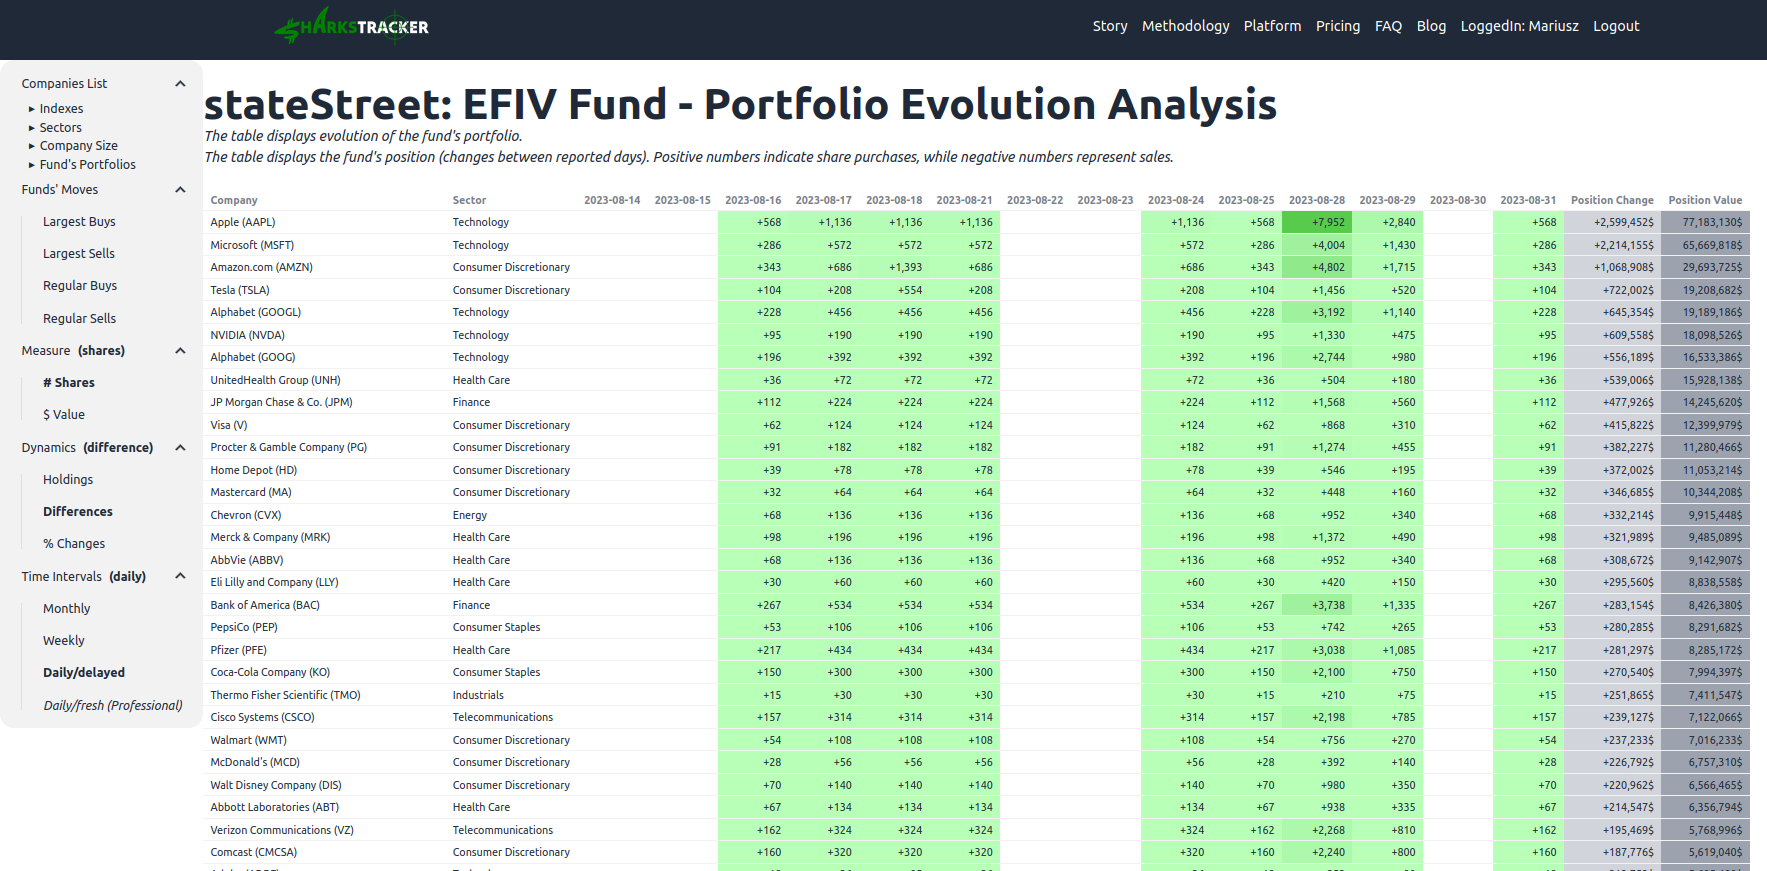 Table containing data about StateStreet fund portfolio evolution